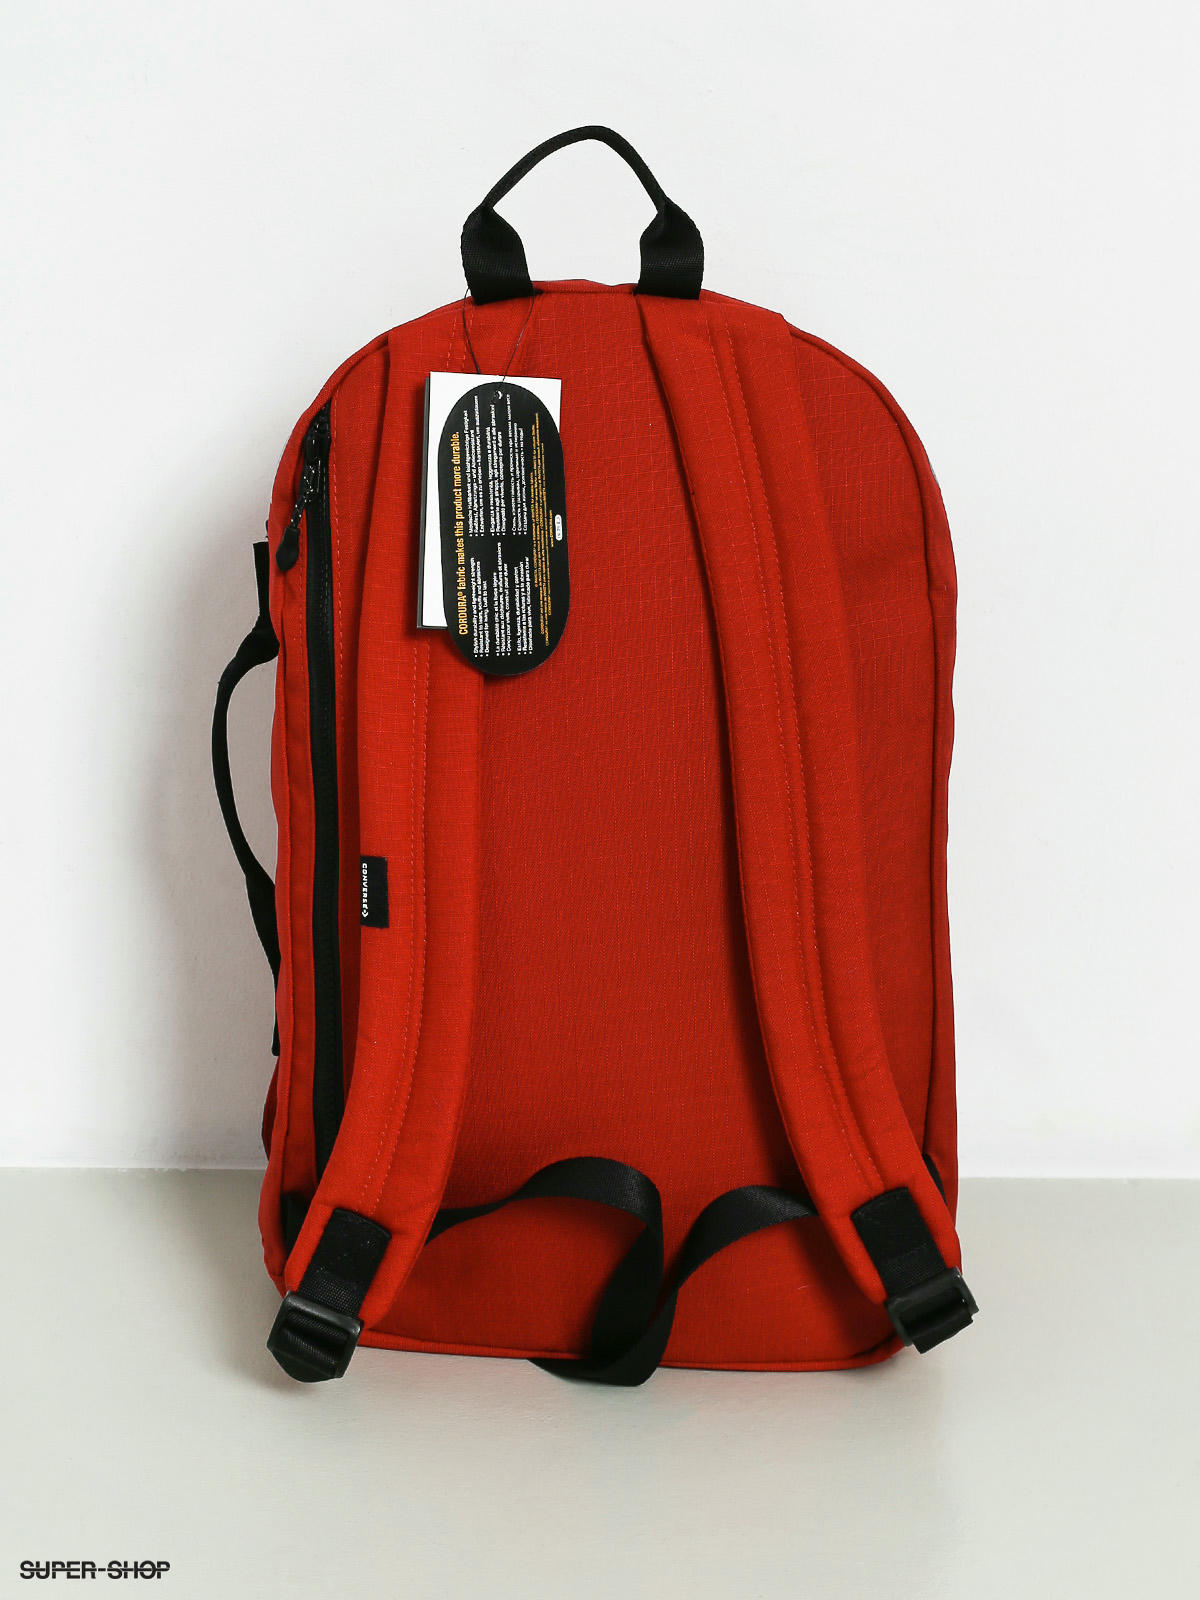 converse cordura backpack